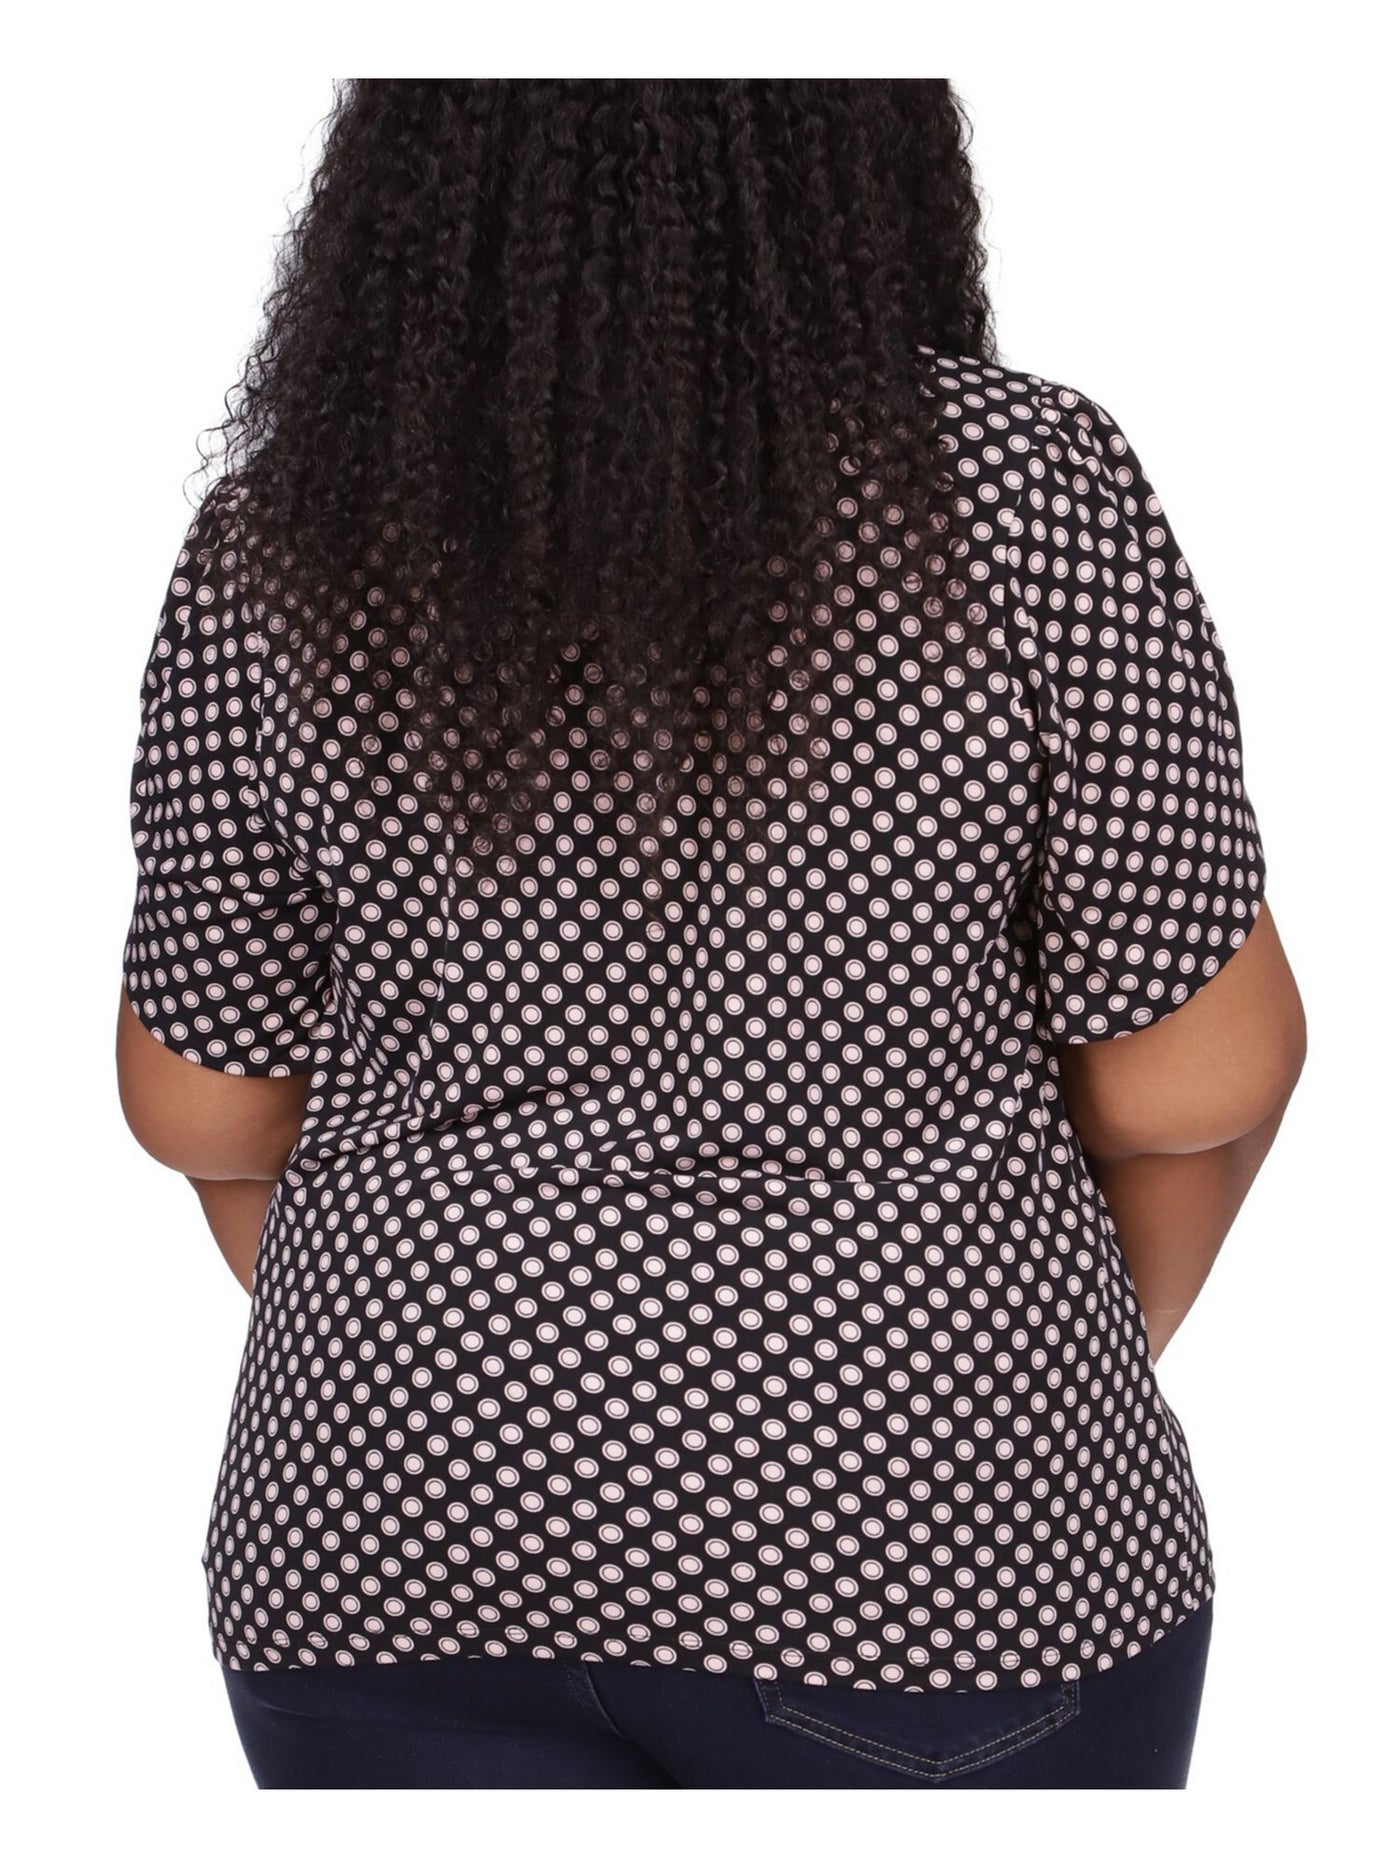 MICHAEL KORS Womens Black Polka Dot Petal Sleeve Round Neck Top Plus 3X